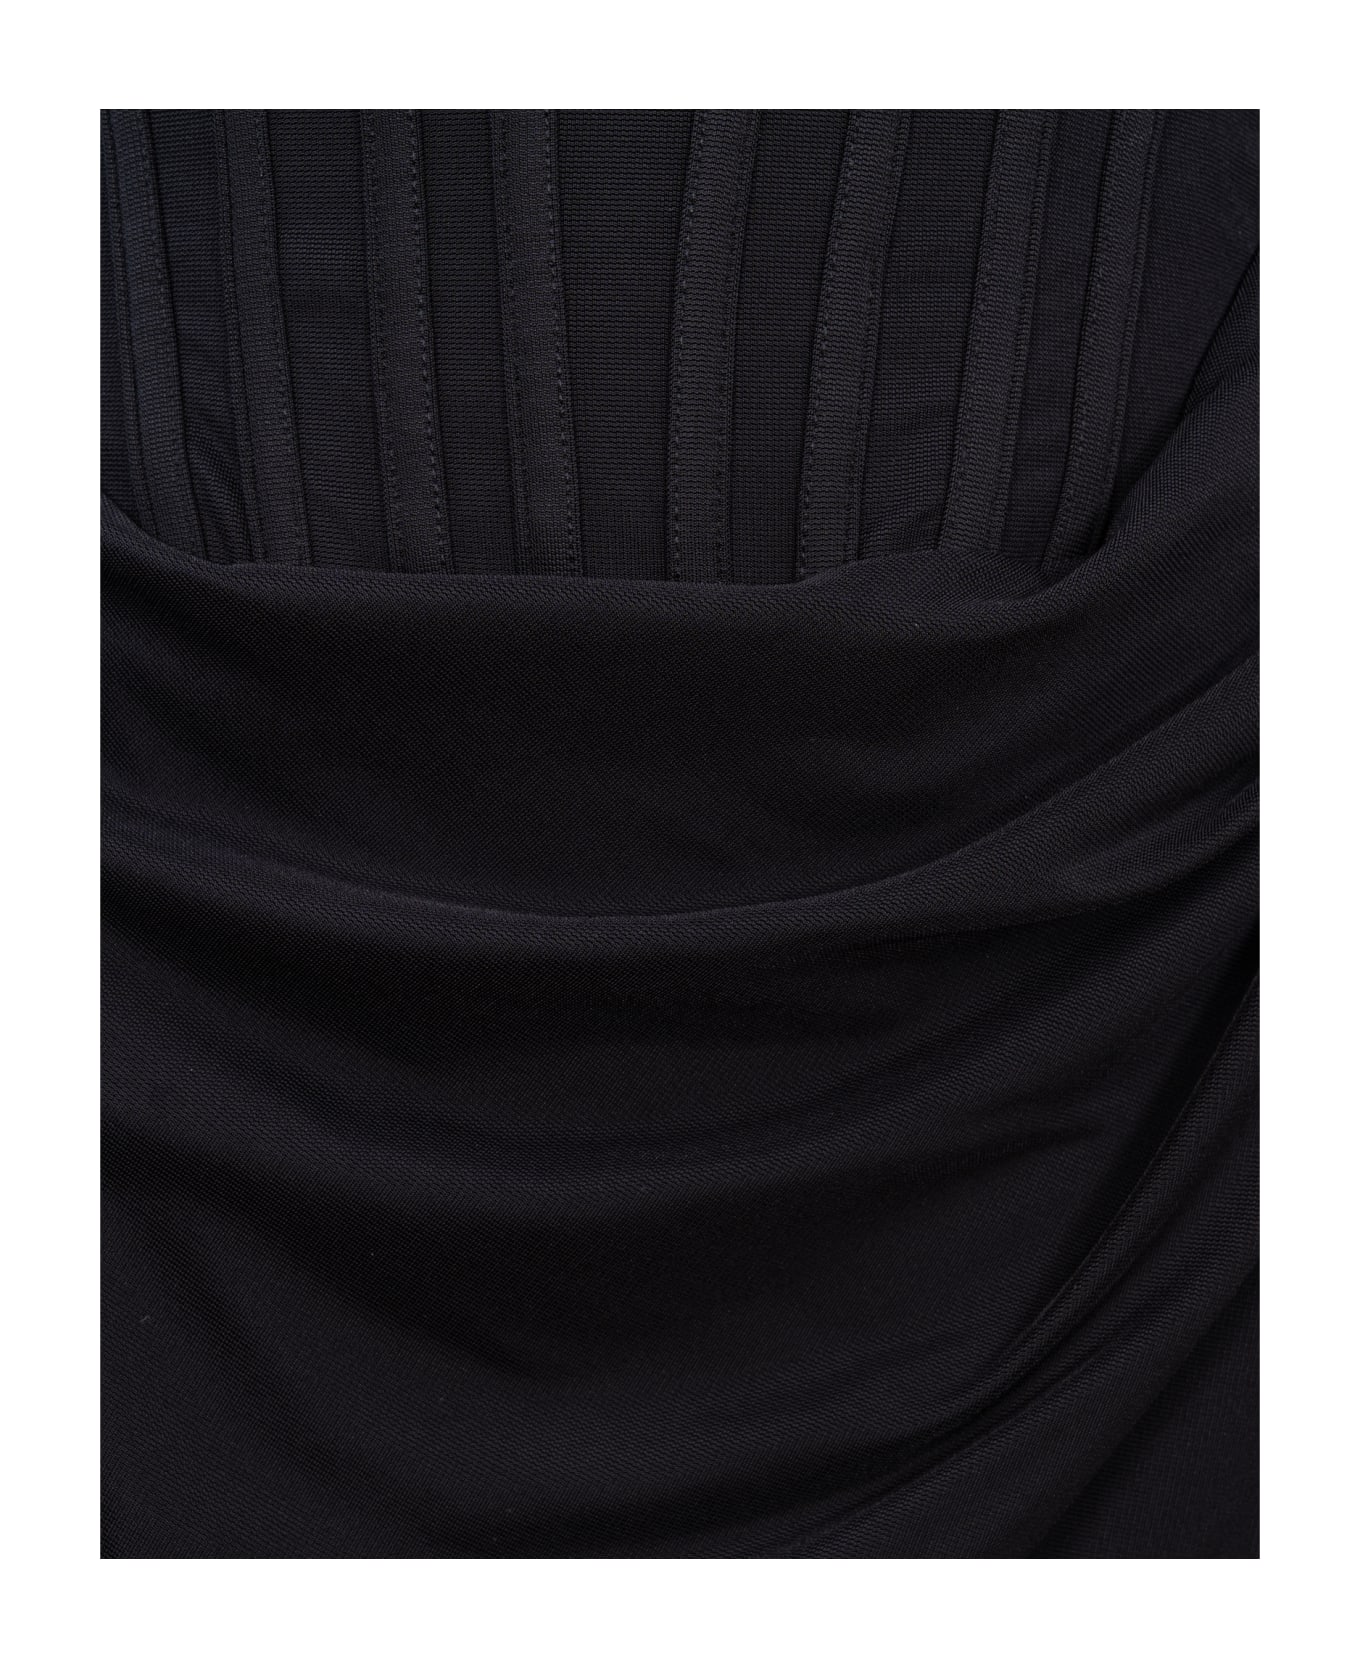 Elisabetta Franchi Dresses Black - Black